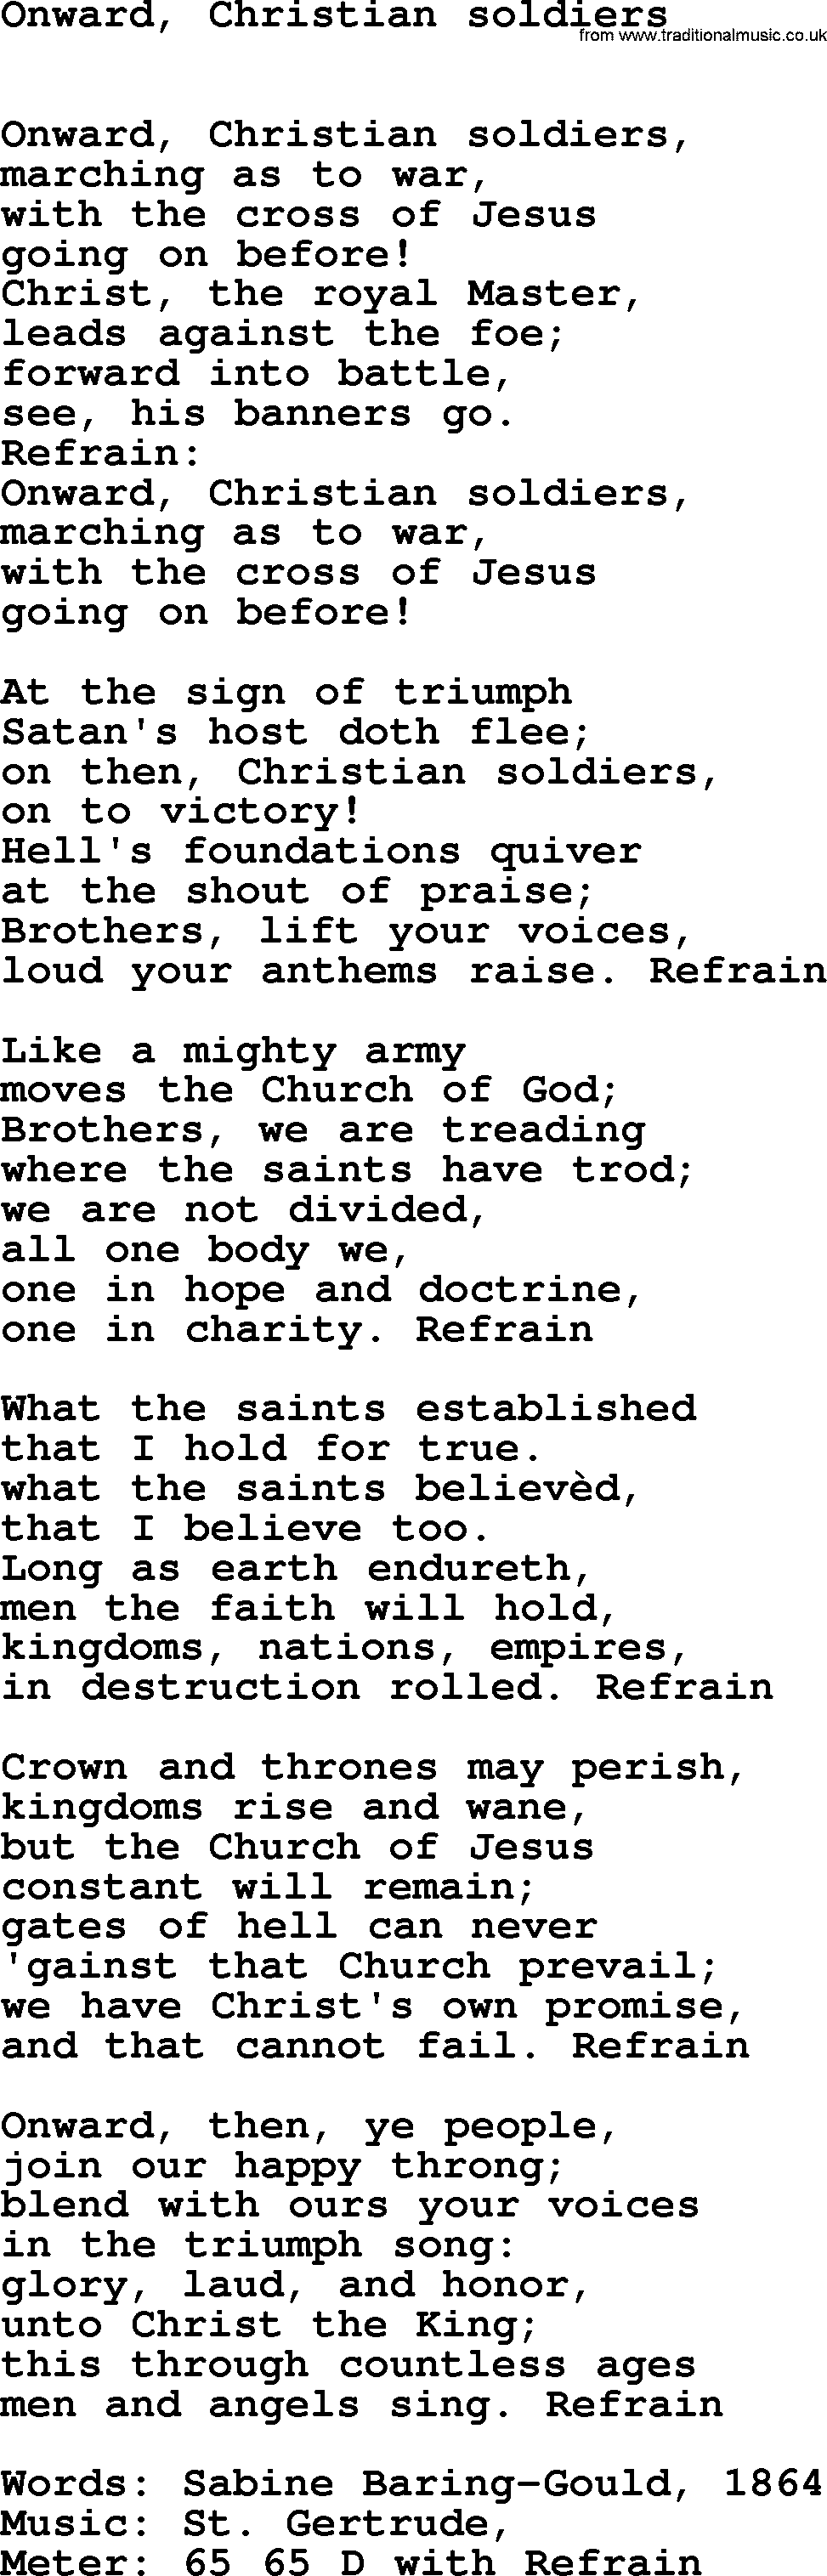 Book of Common Praise Hymn: Onward, Christian Soldiers.txt lyrics with midi music